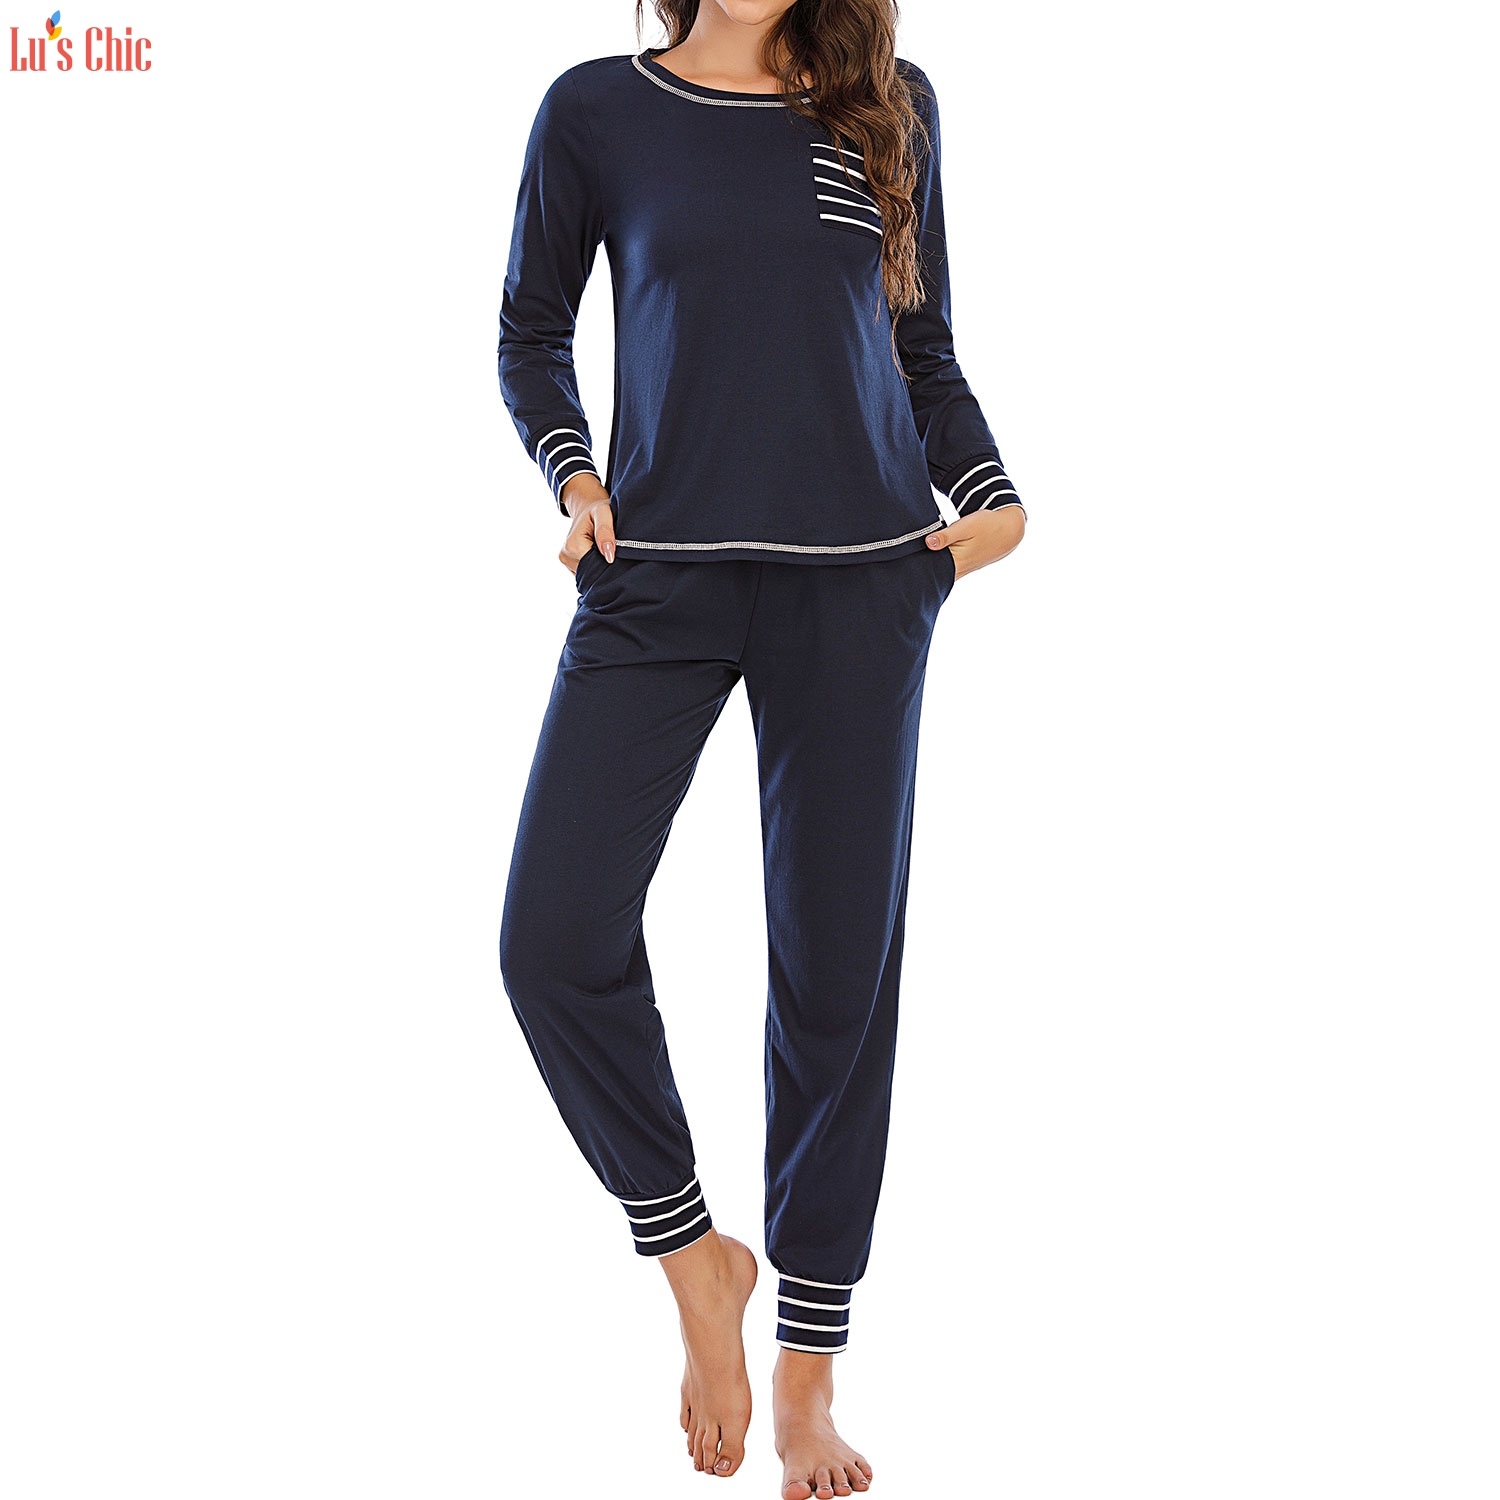 ENJOYNIGHT Women's Sleepwear Tops with Capri Pants Pajama Sets, A-moon  Star, Medium price in Saudi Arabia,  Saudi Arabia